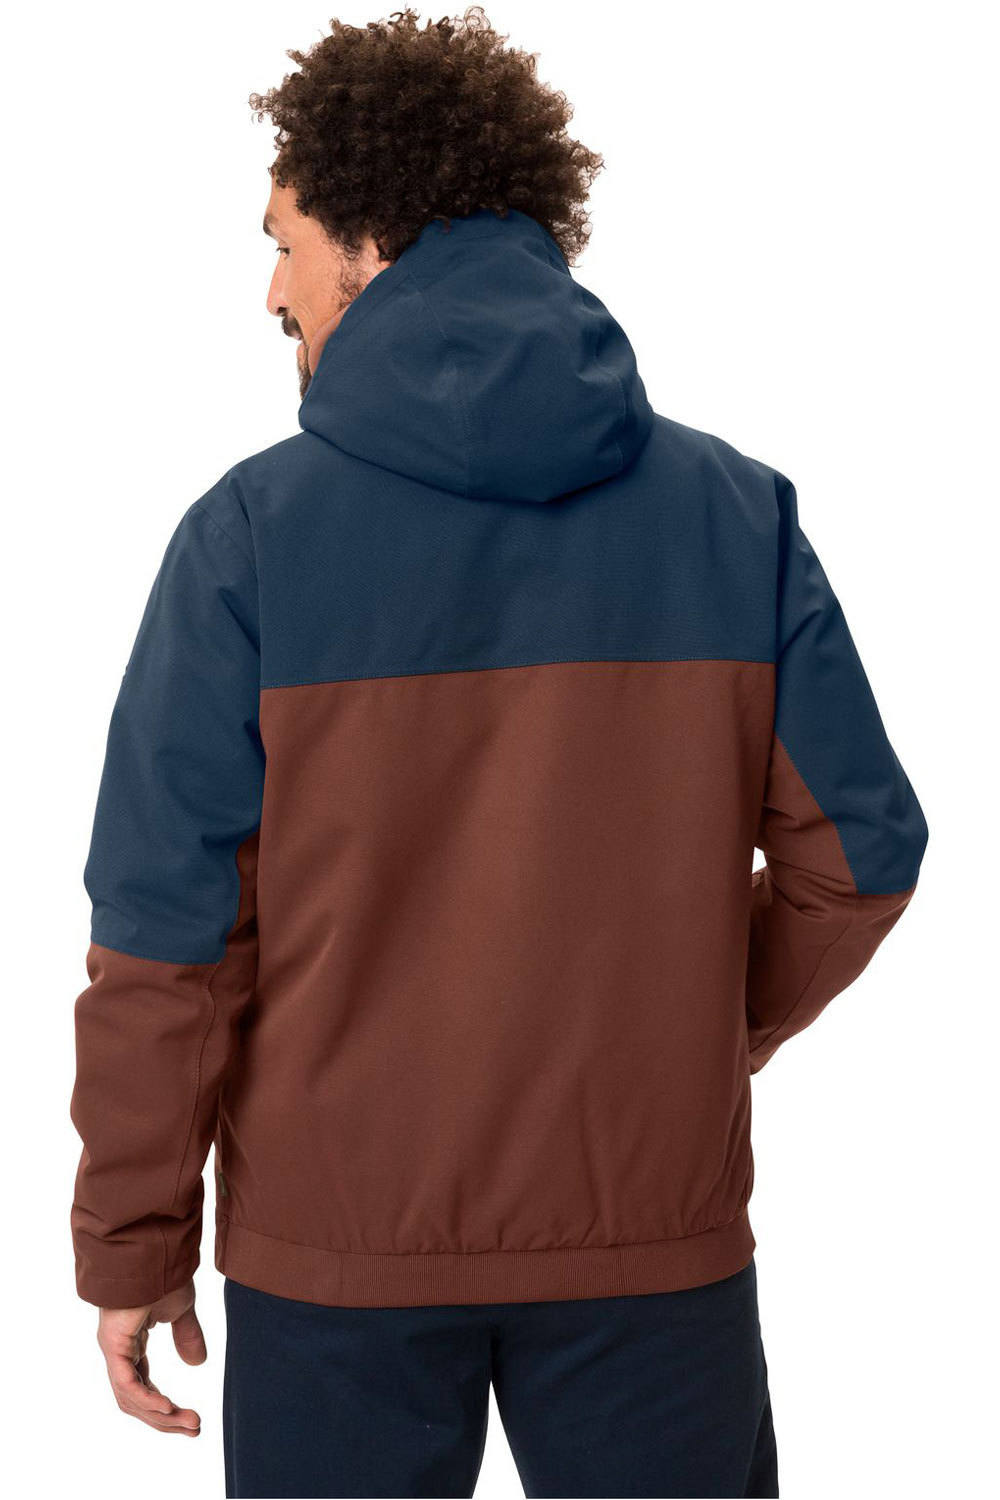 Vaude chaqueta impermeable insulada hombre Mens Manukau Jacket II vista trasera